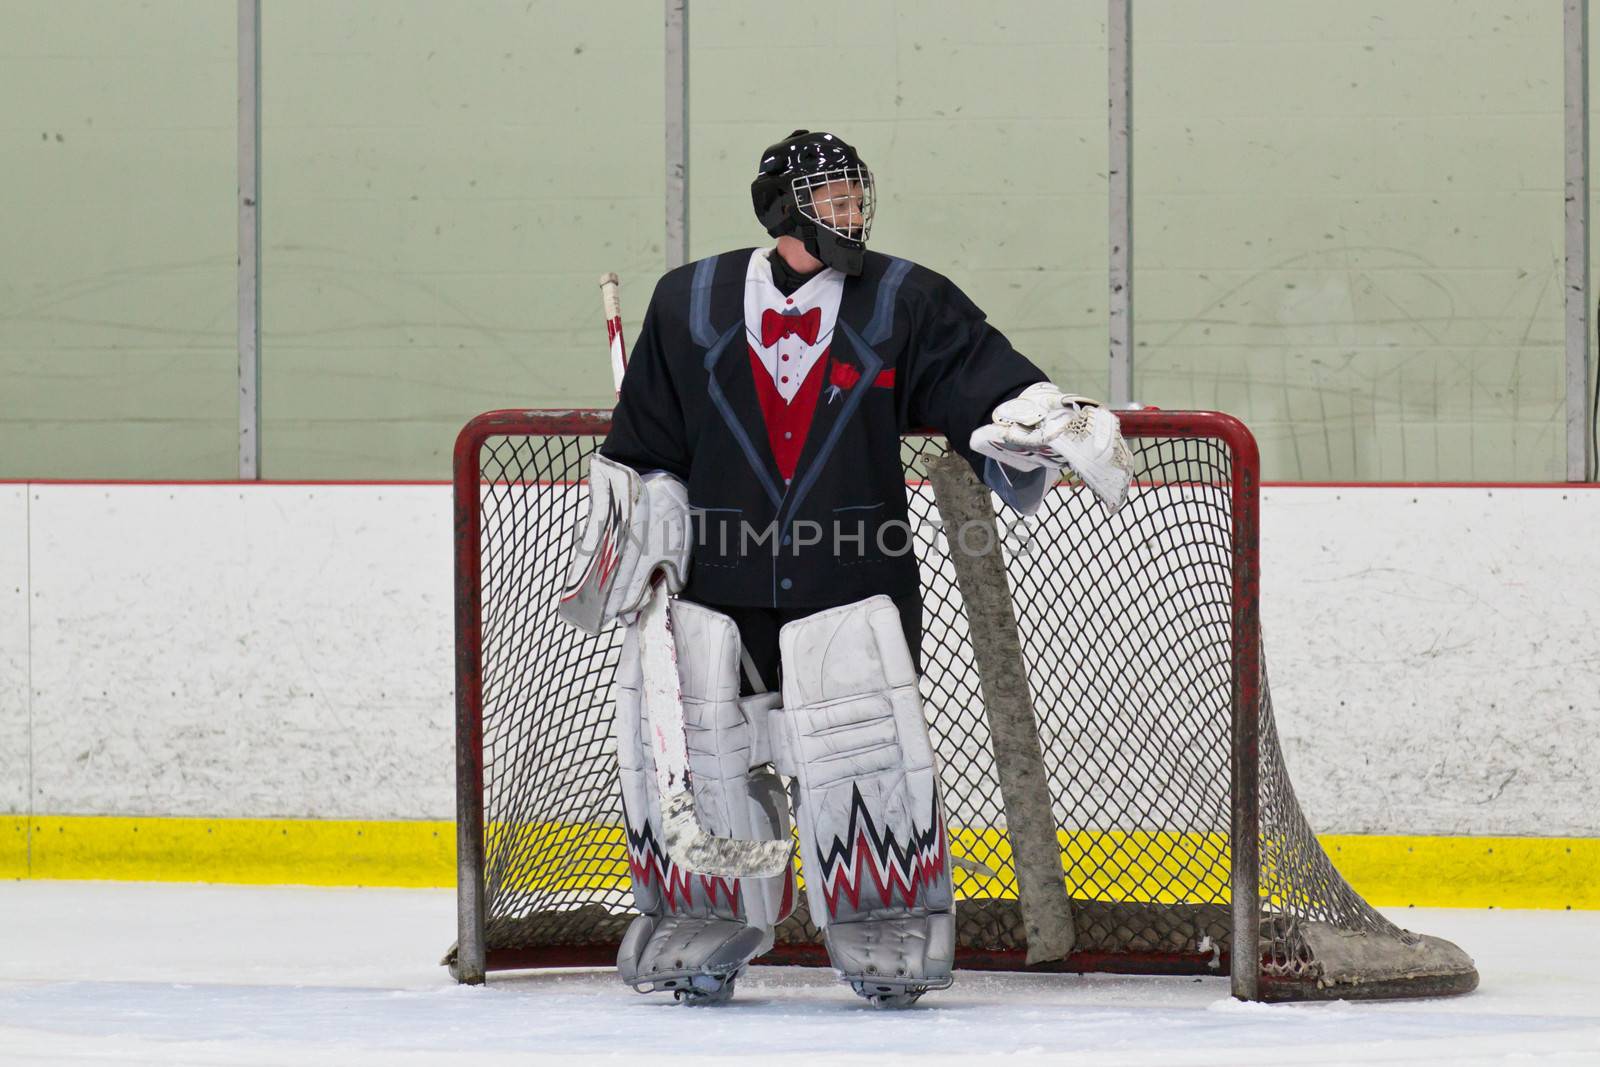 Hockey goalie in his net